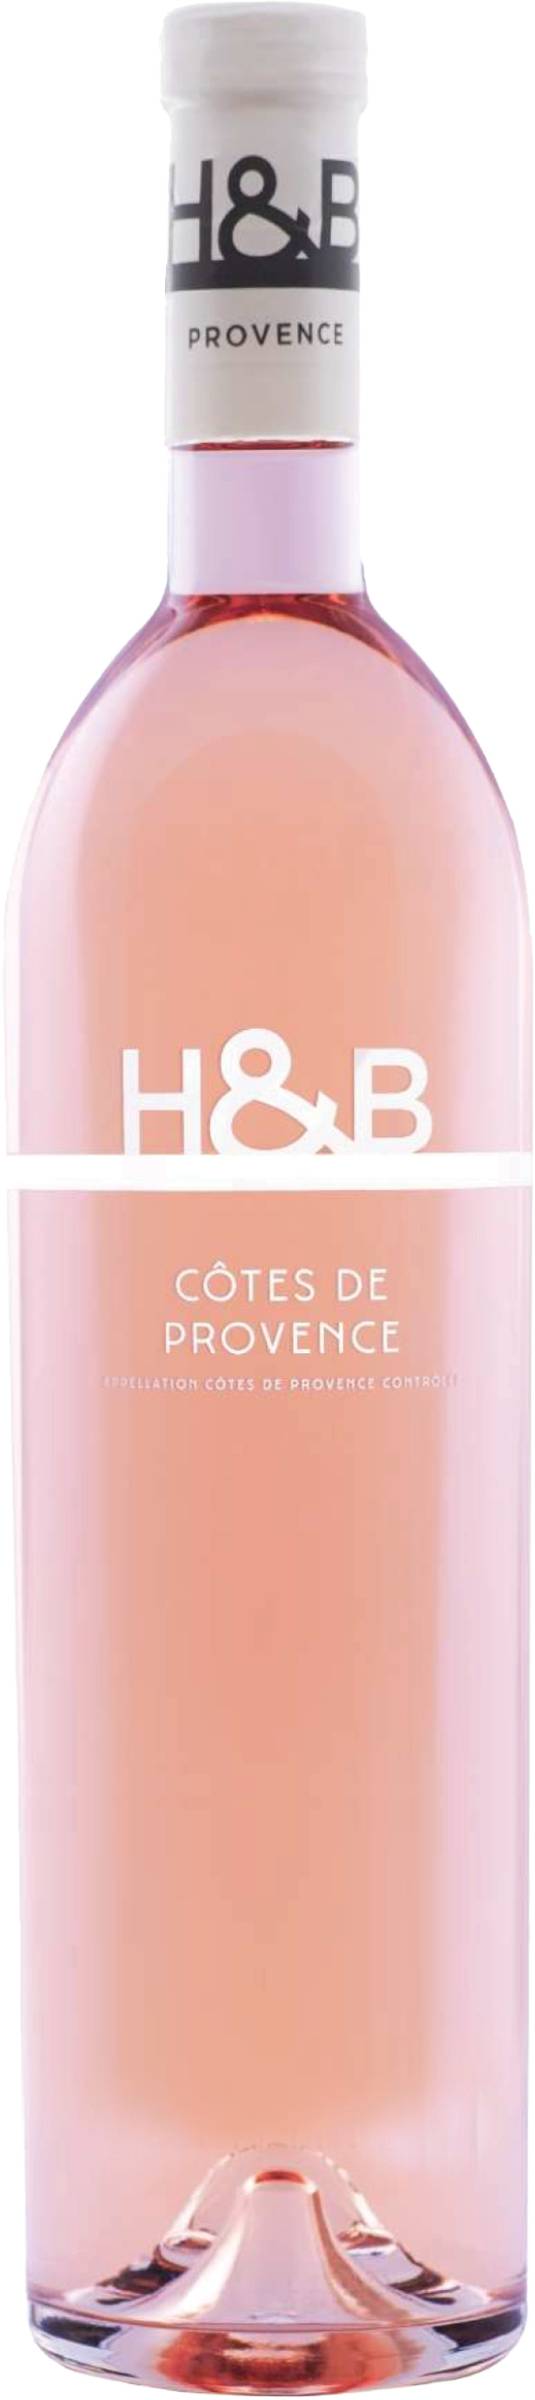 Hecht & Bannier Cotes de Provence Rose 750ml